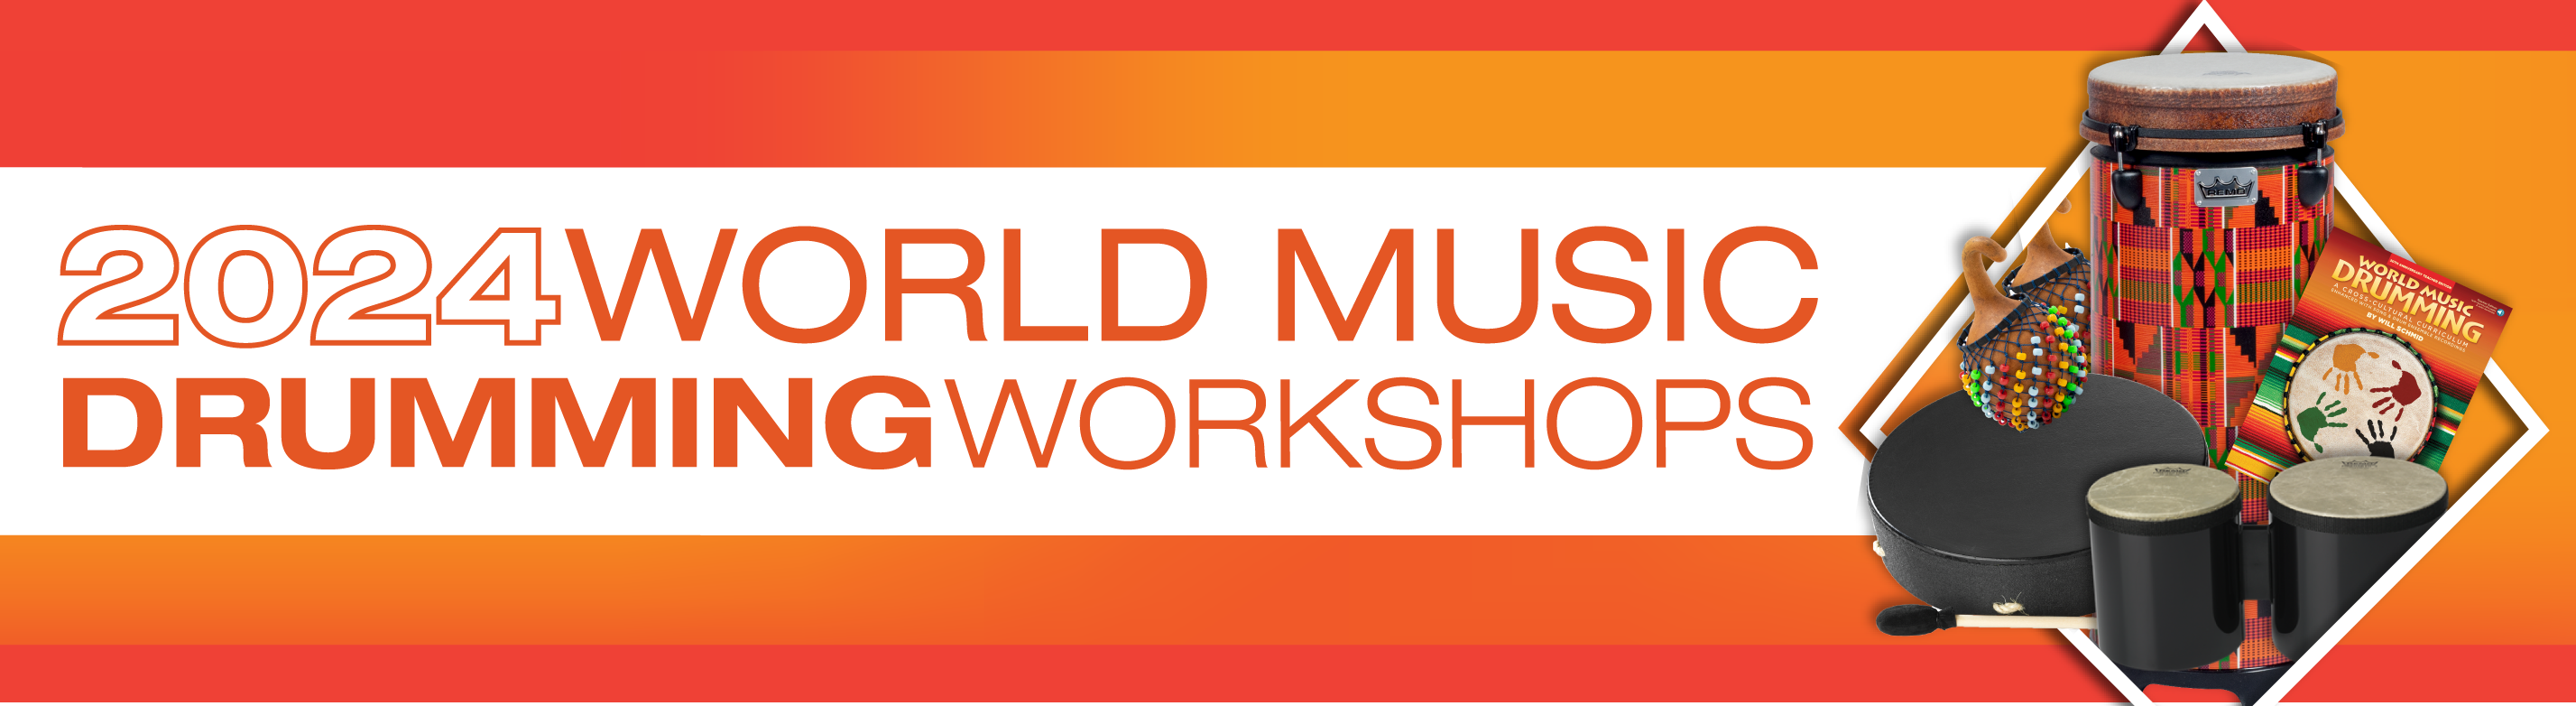 world music drumming workshops 2024